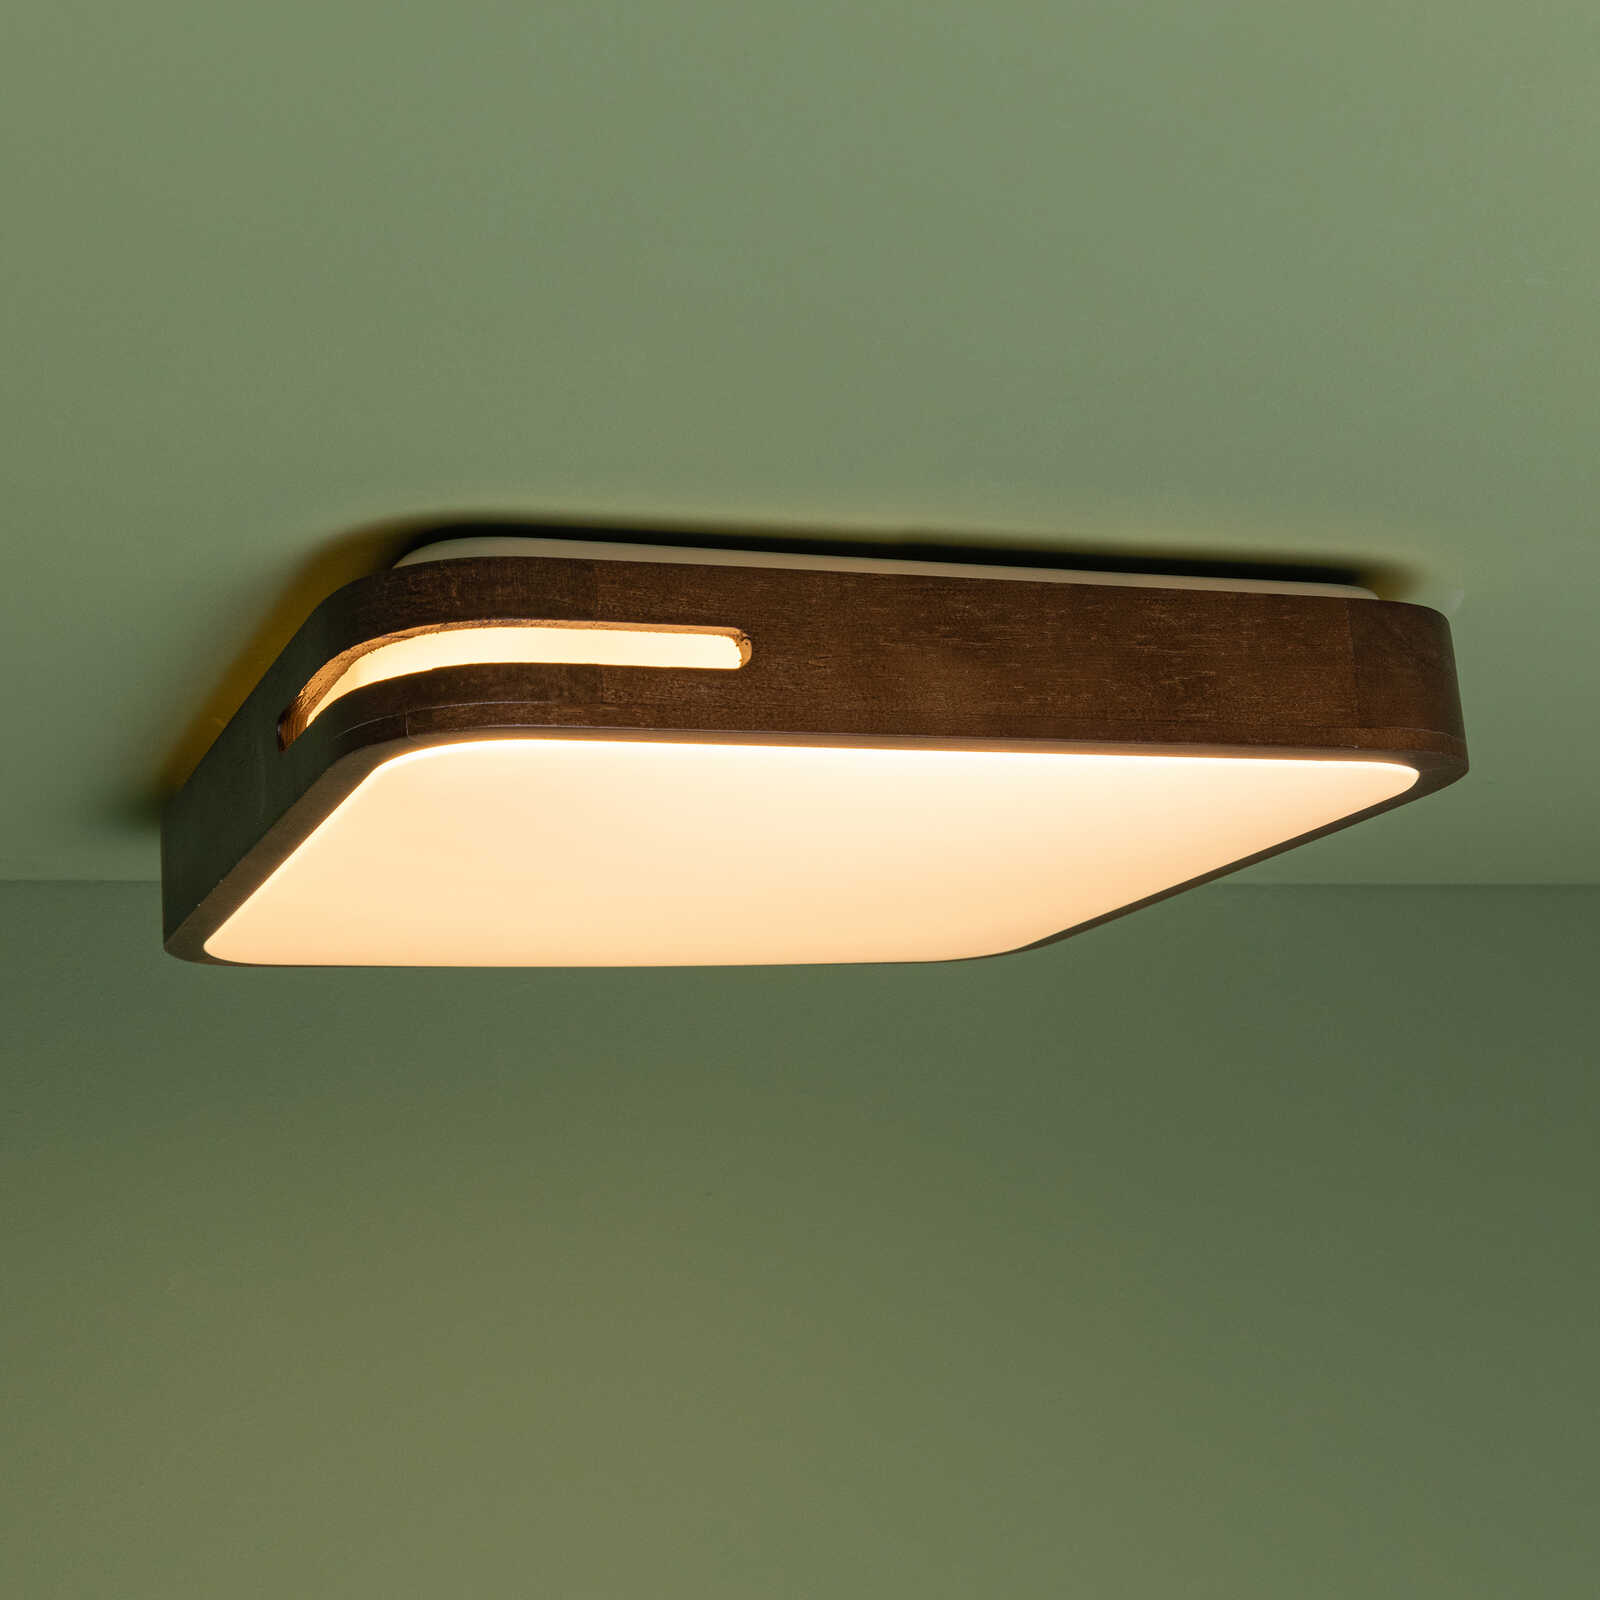             Wooden ceiling light - Viola 3 - Brown
        